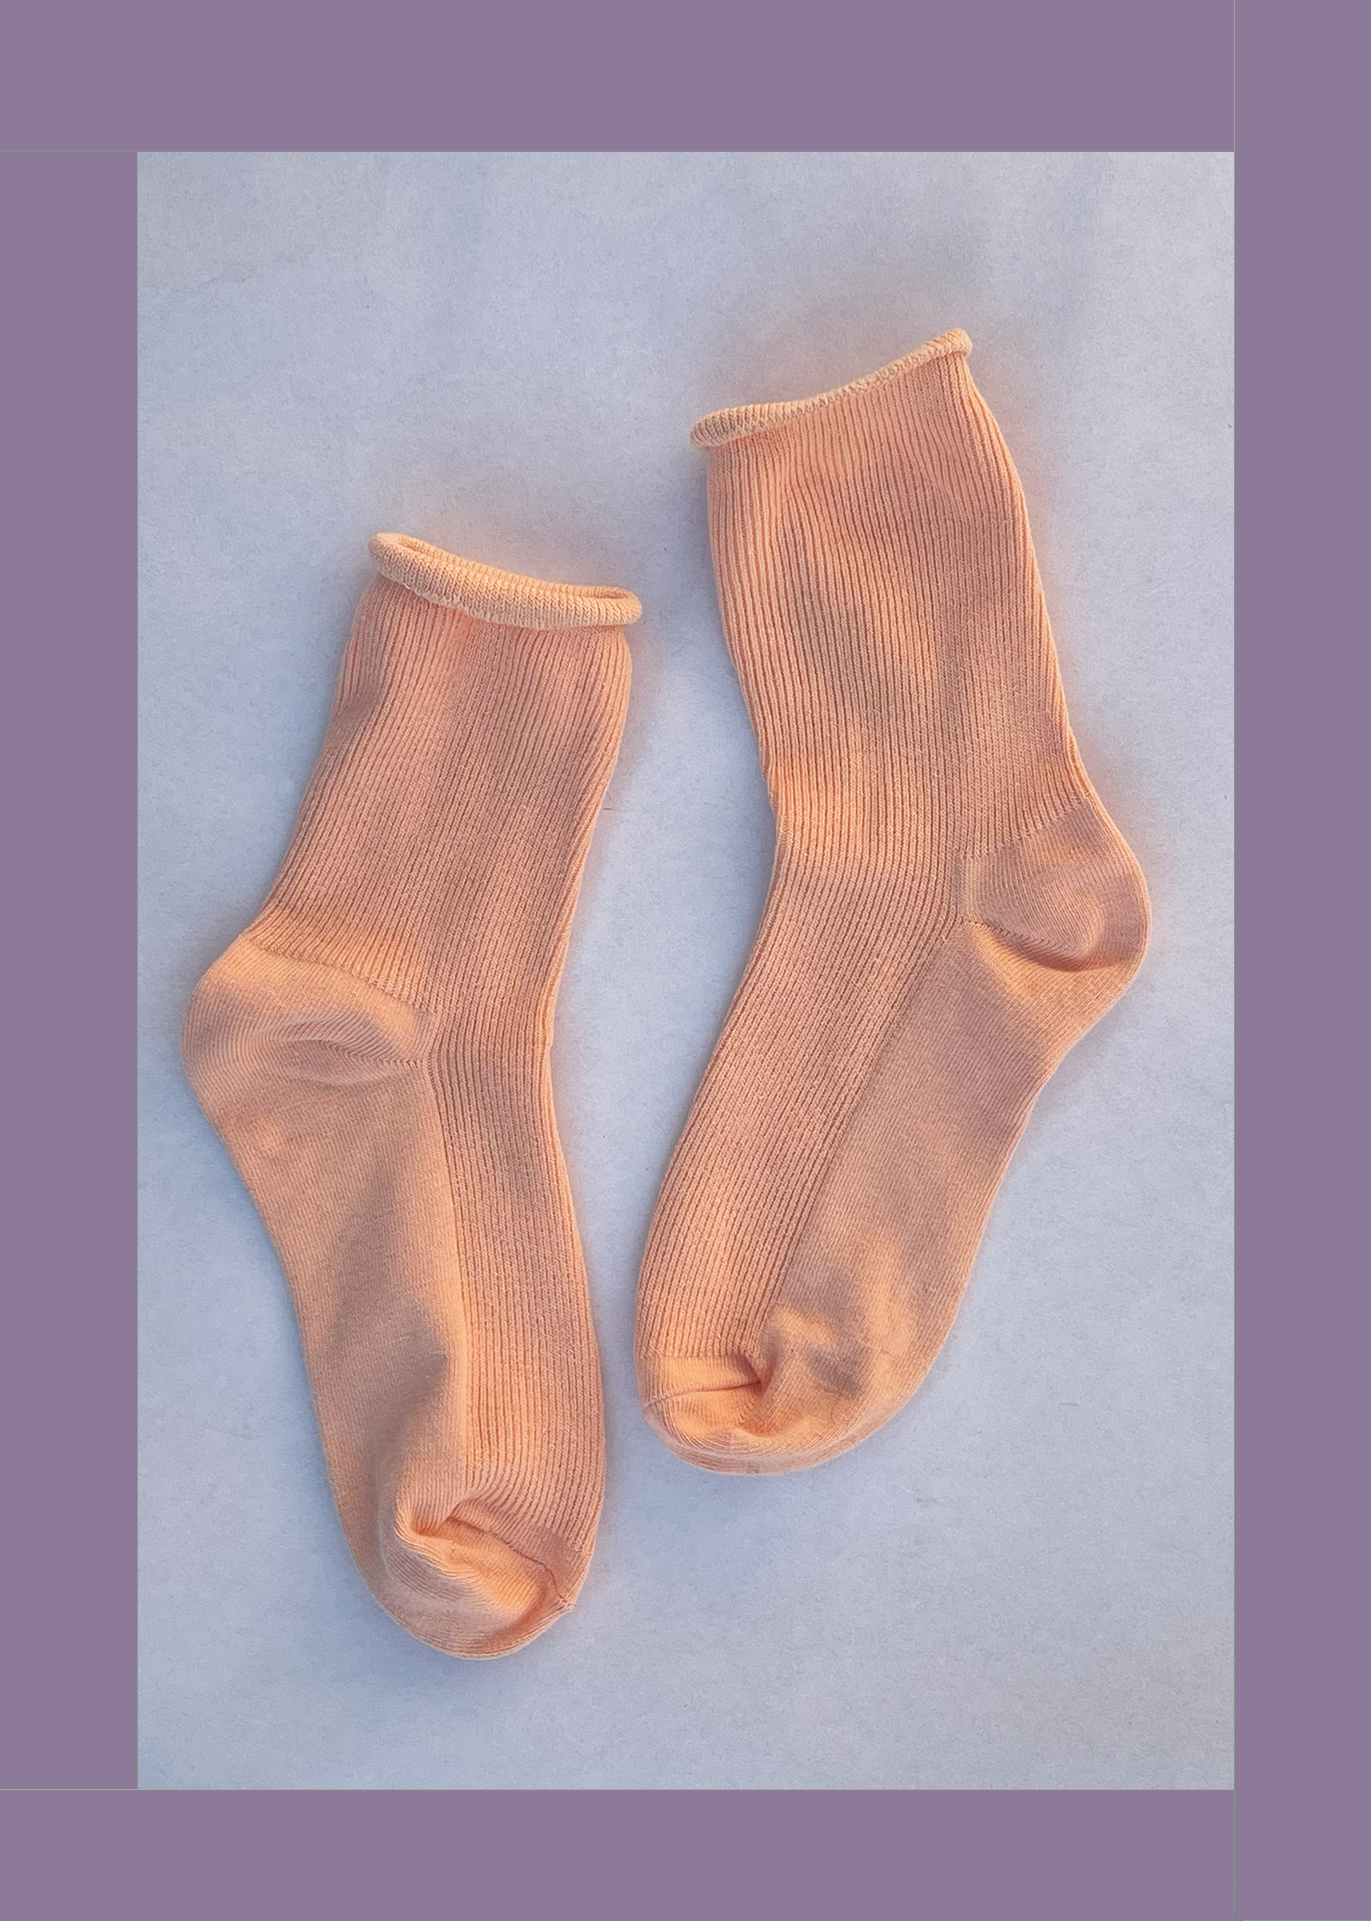 Apricot MIlk socks. Cotton/ Nylon blend apricot colour socks